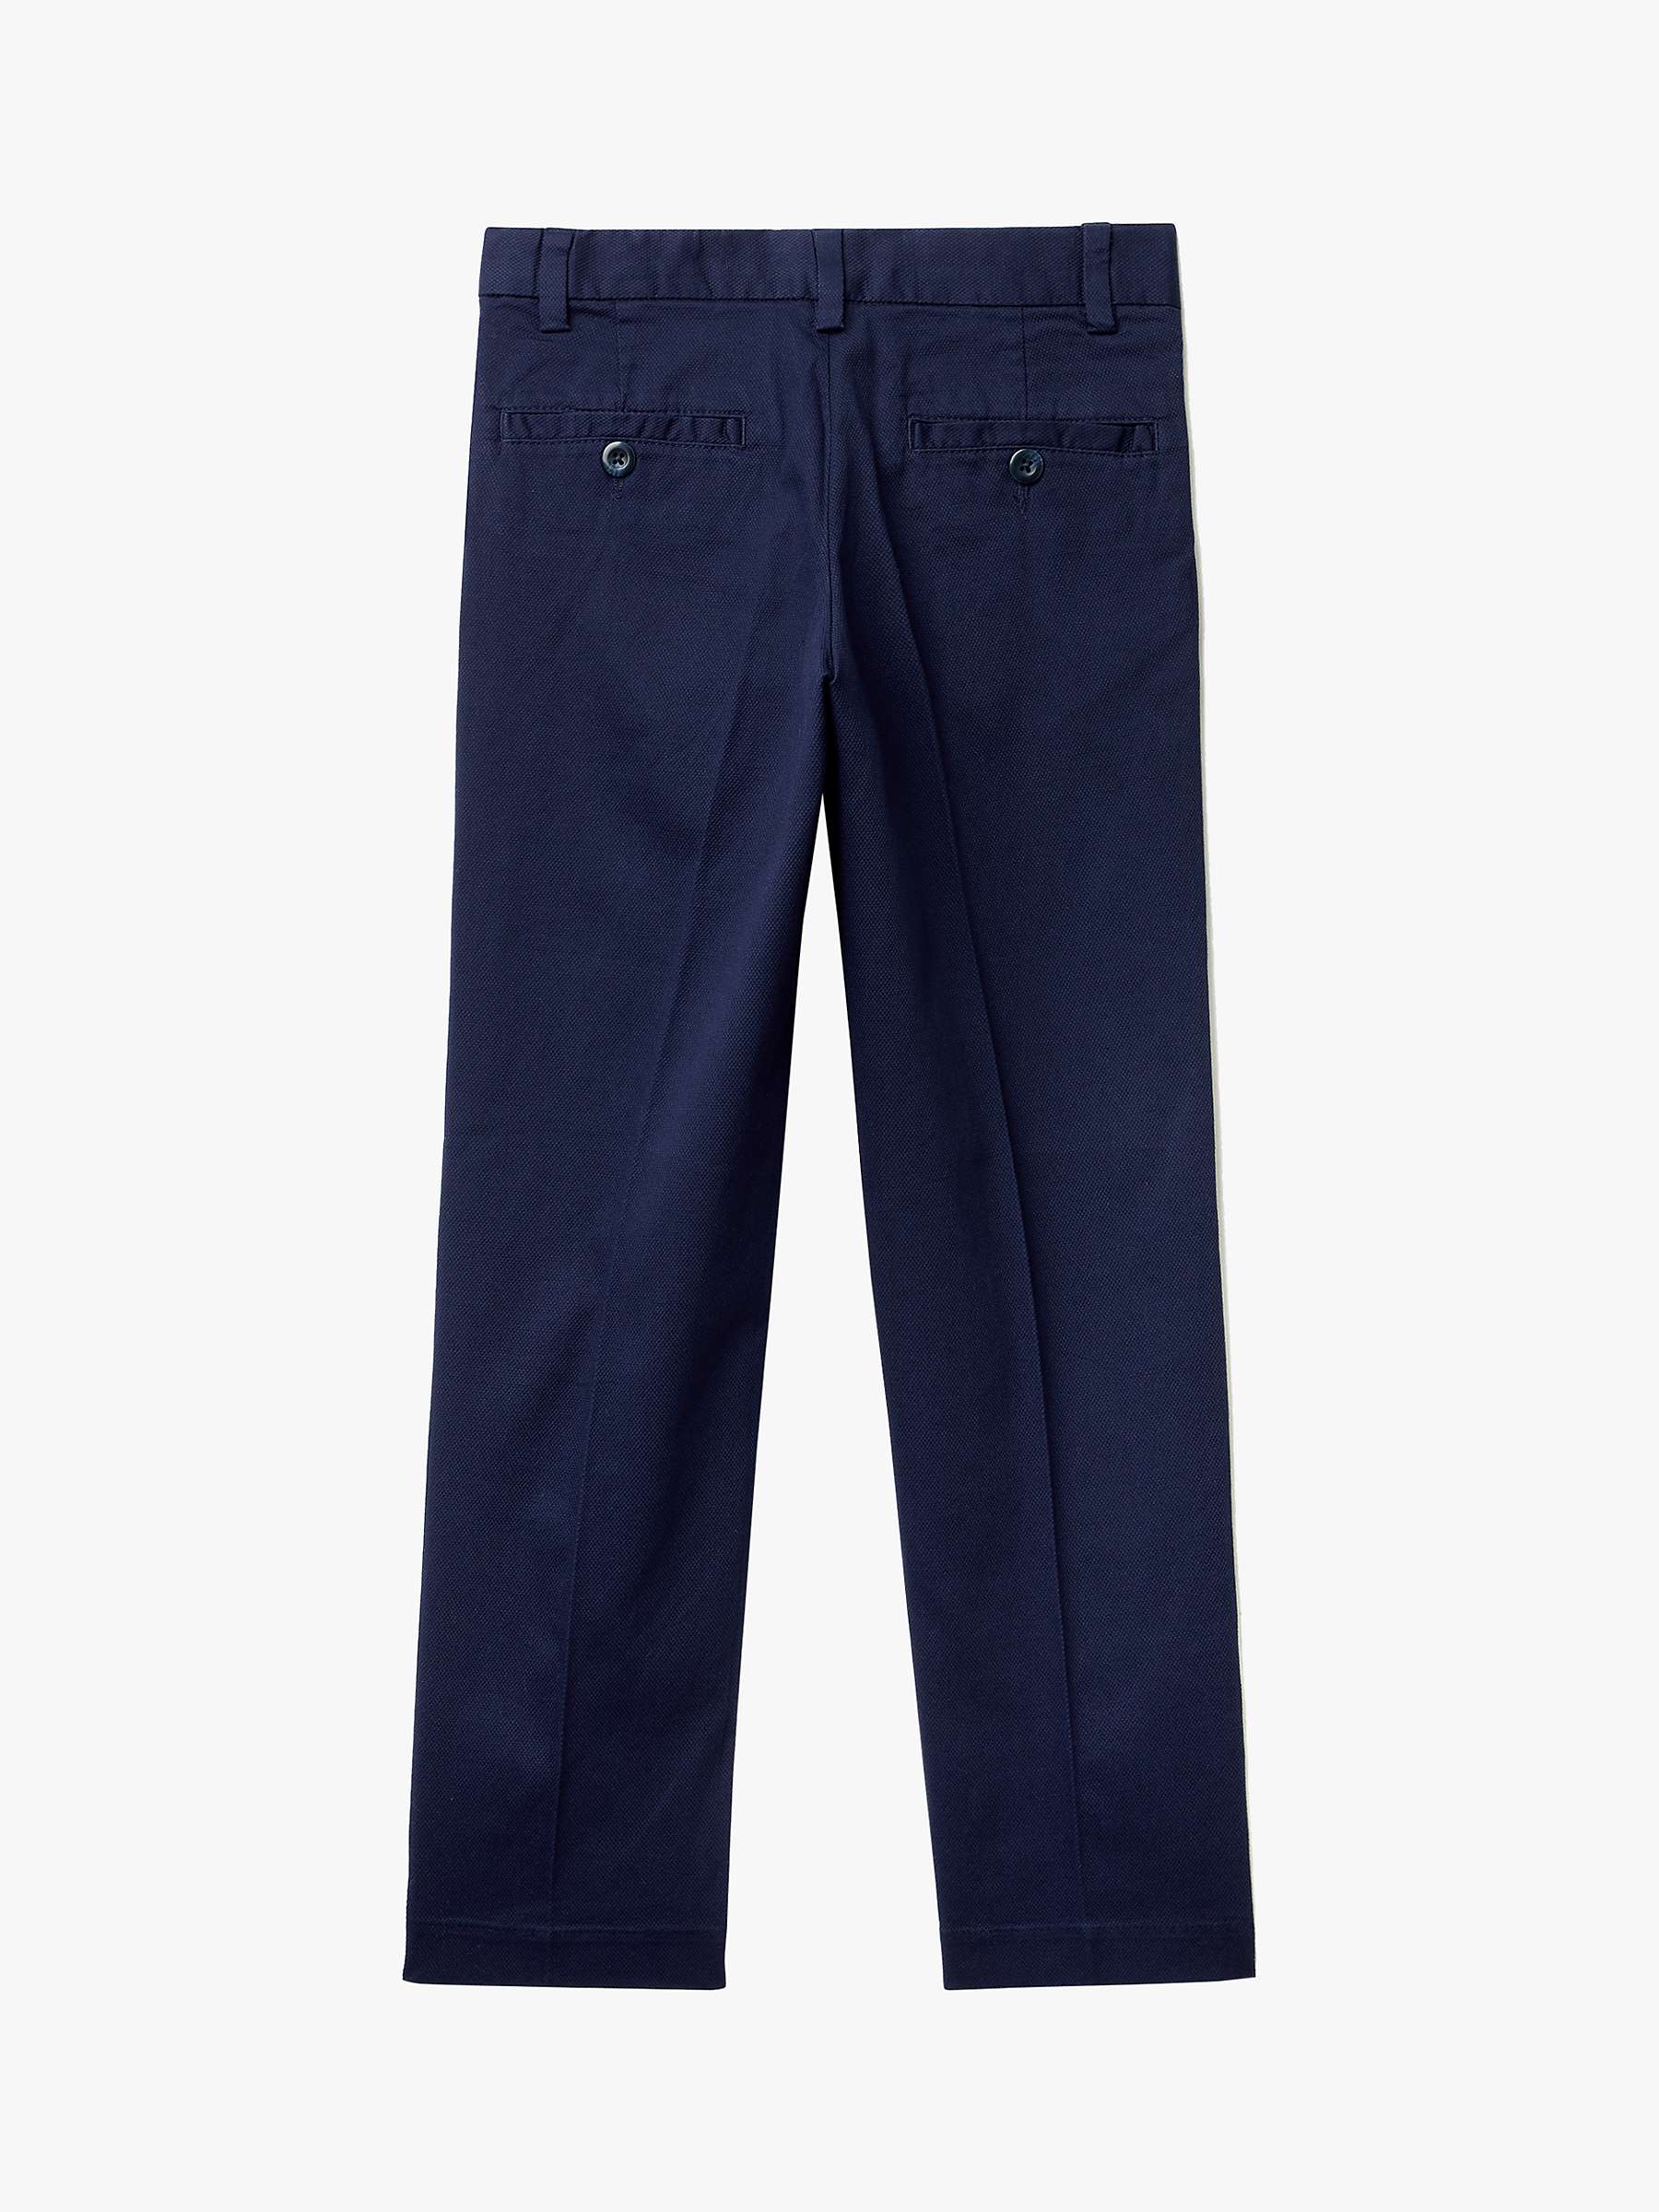 Buy Benetton Kids' Elegant Trousers, Blue Online at johnlewis.com